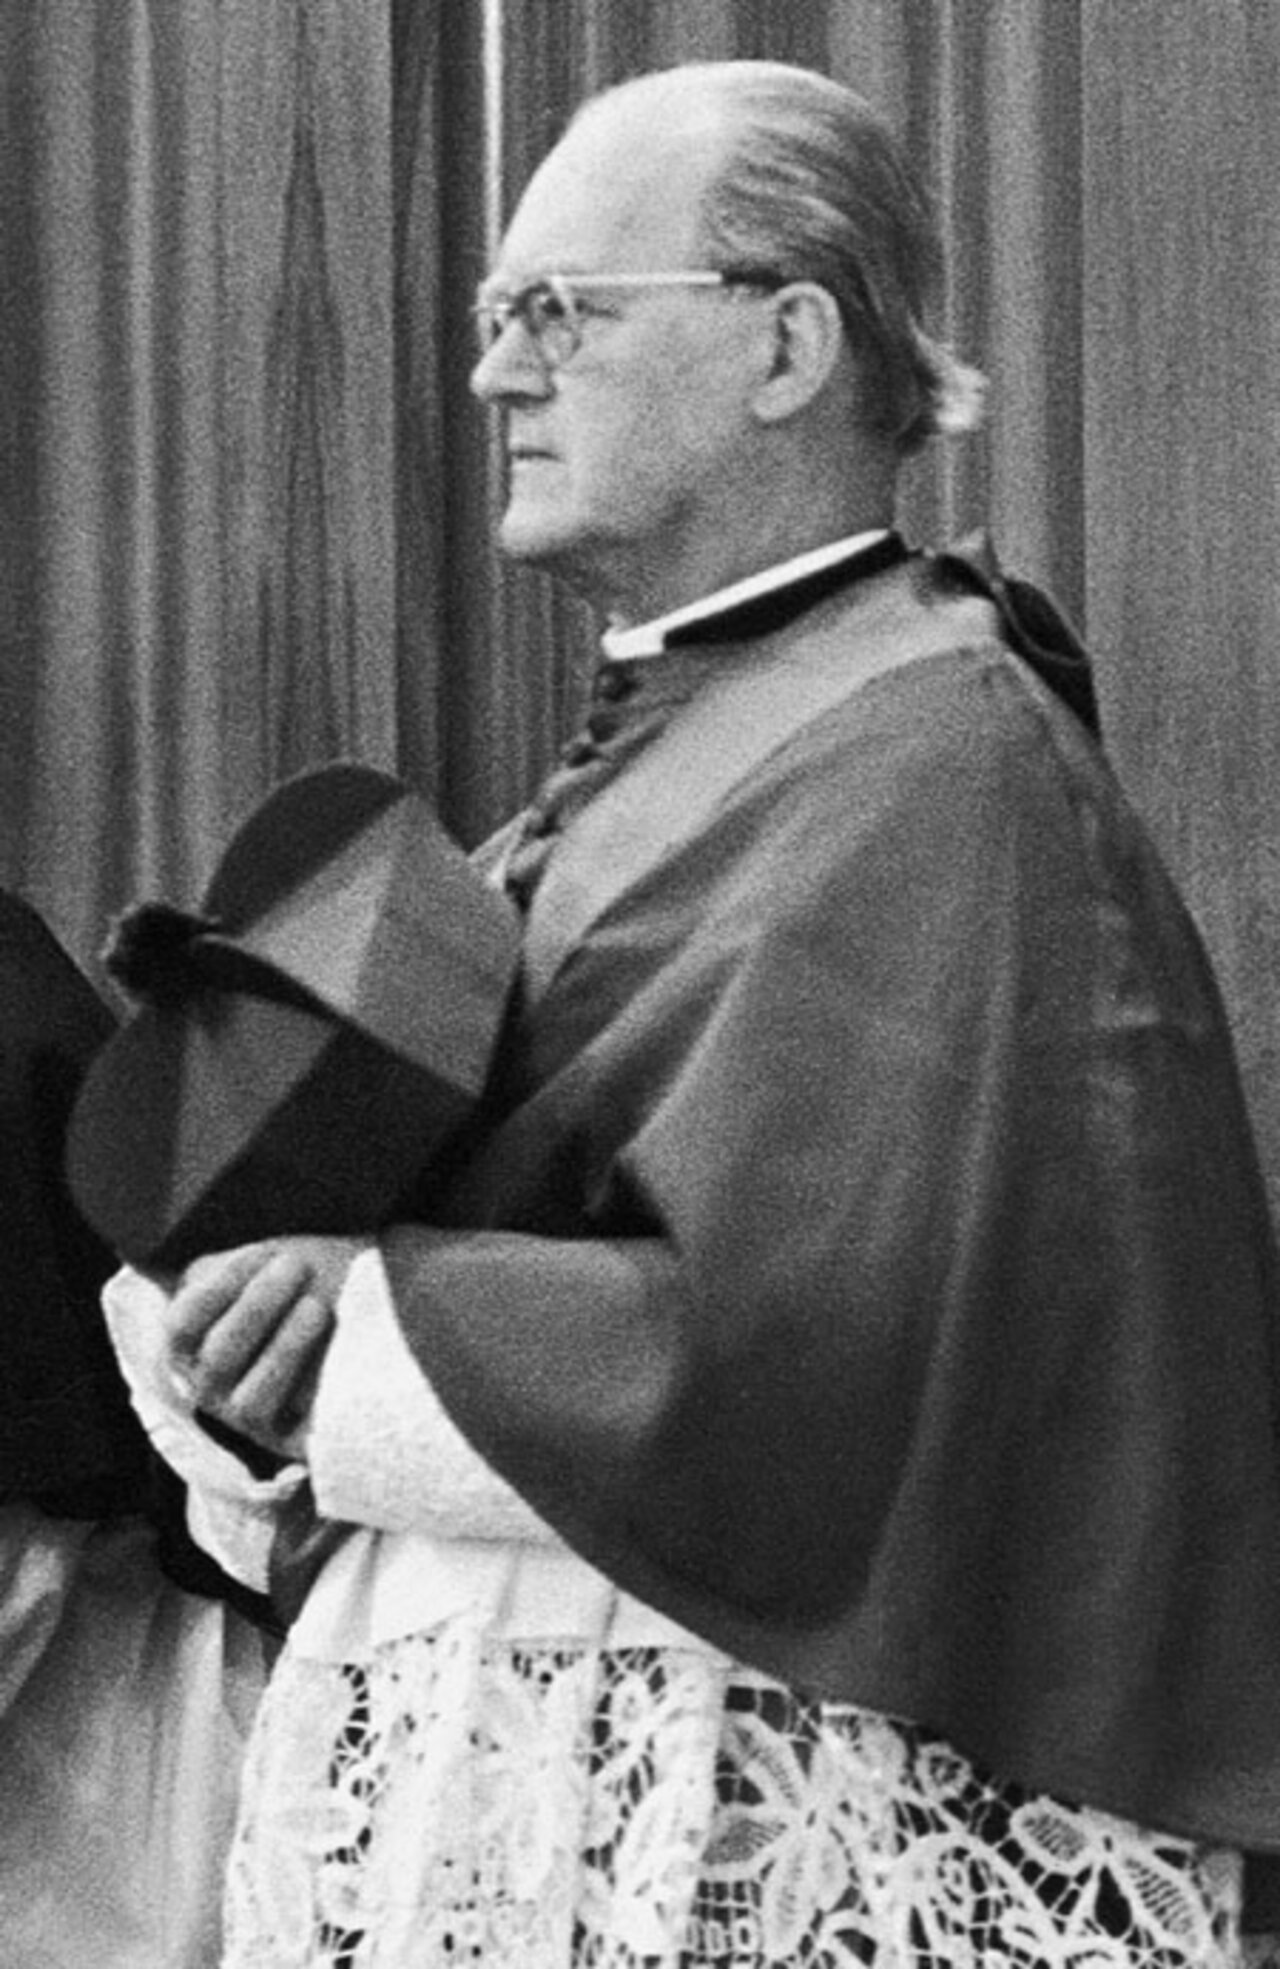 Prelate Franz Wasner